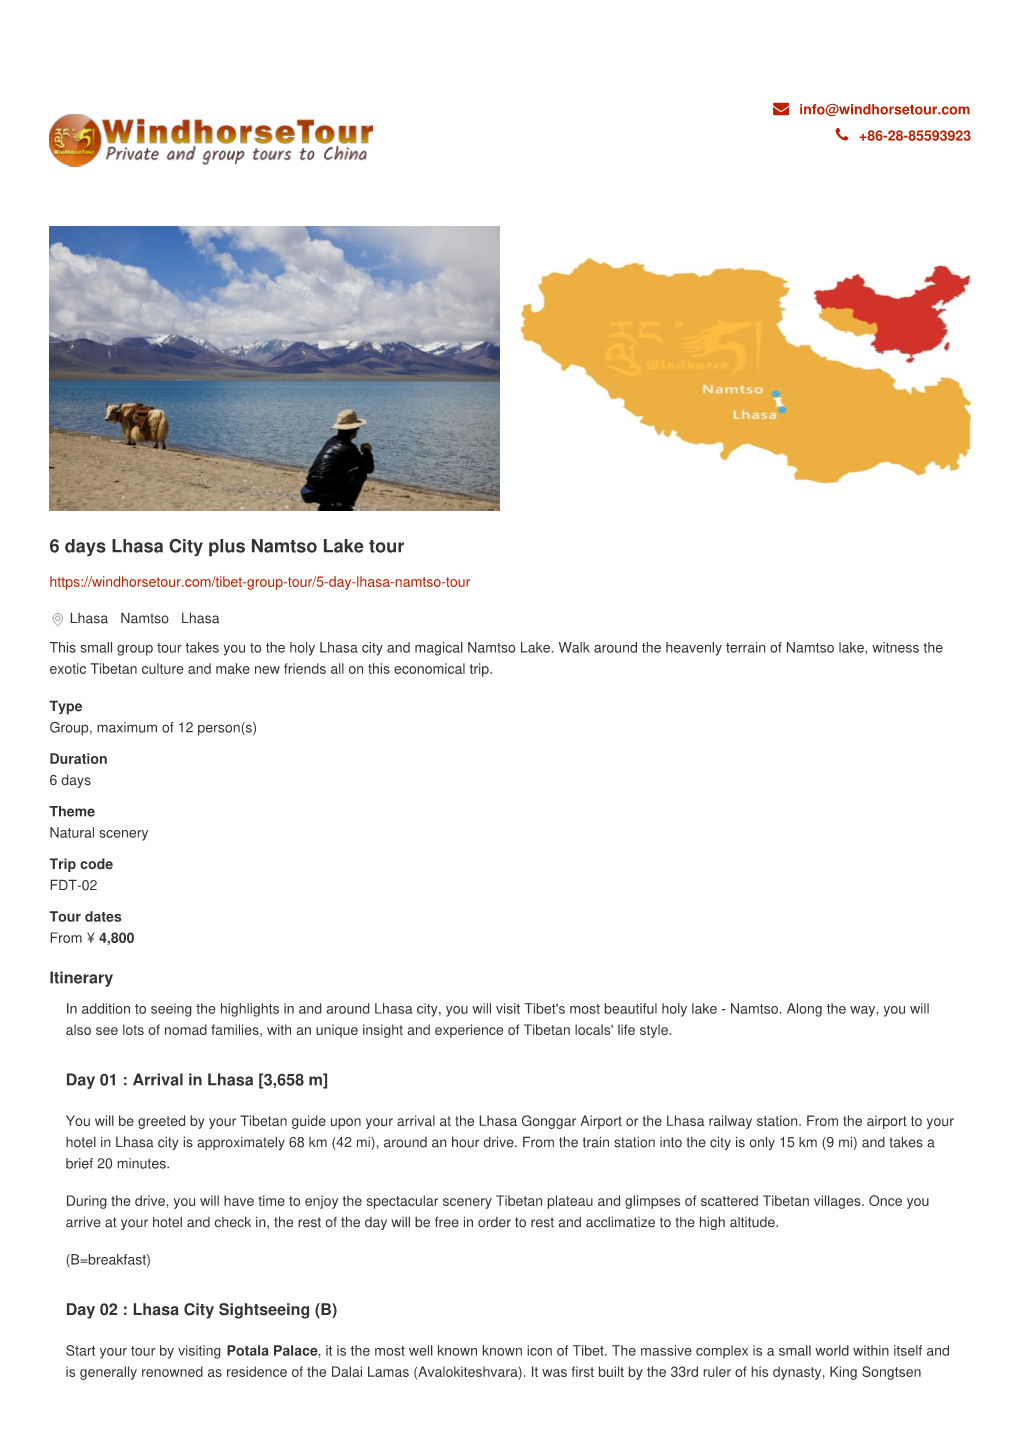 6 Days Lhasa City Plus Namtso Lake Tour